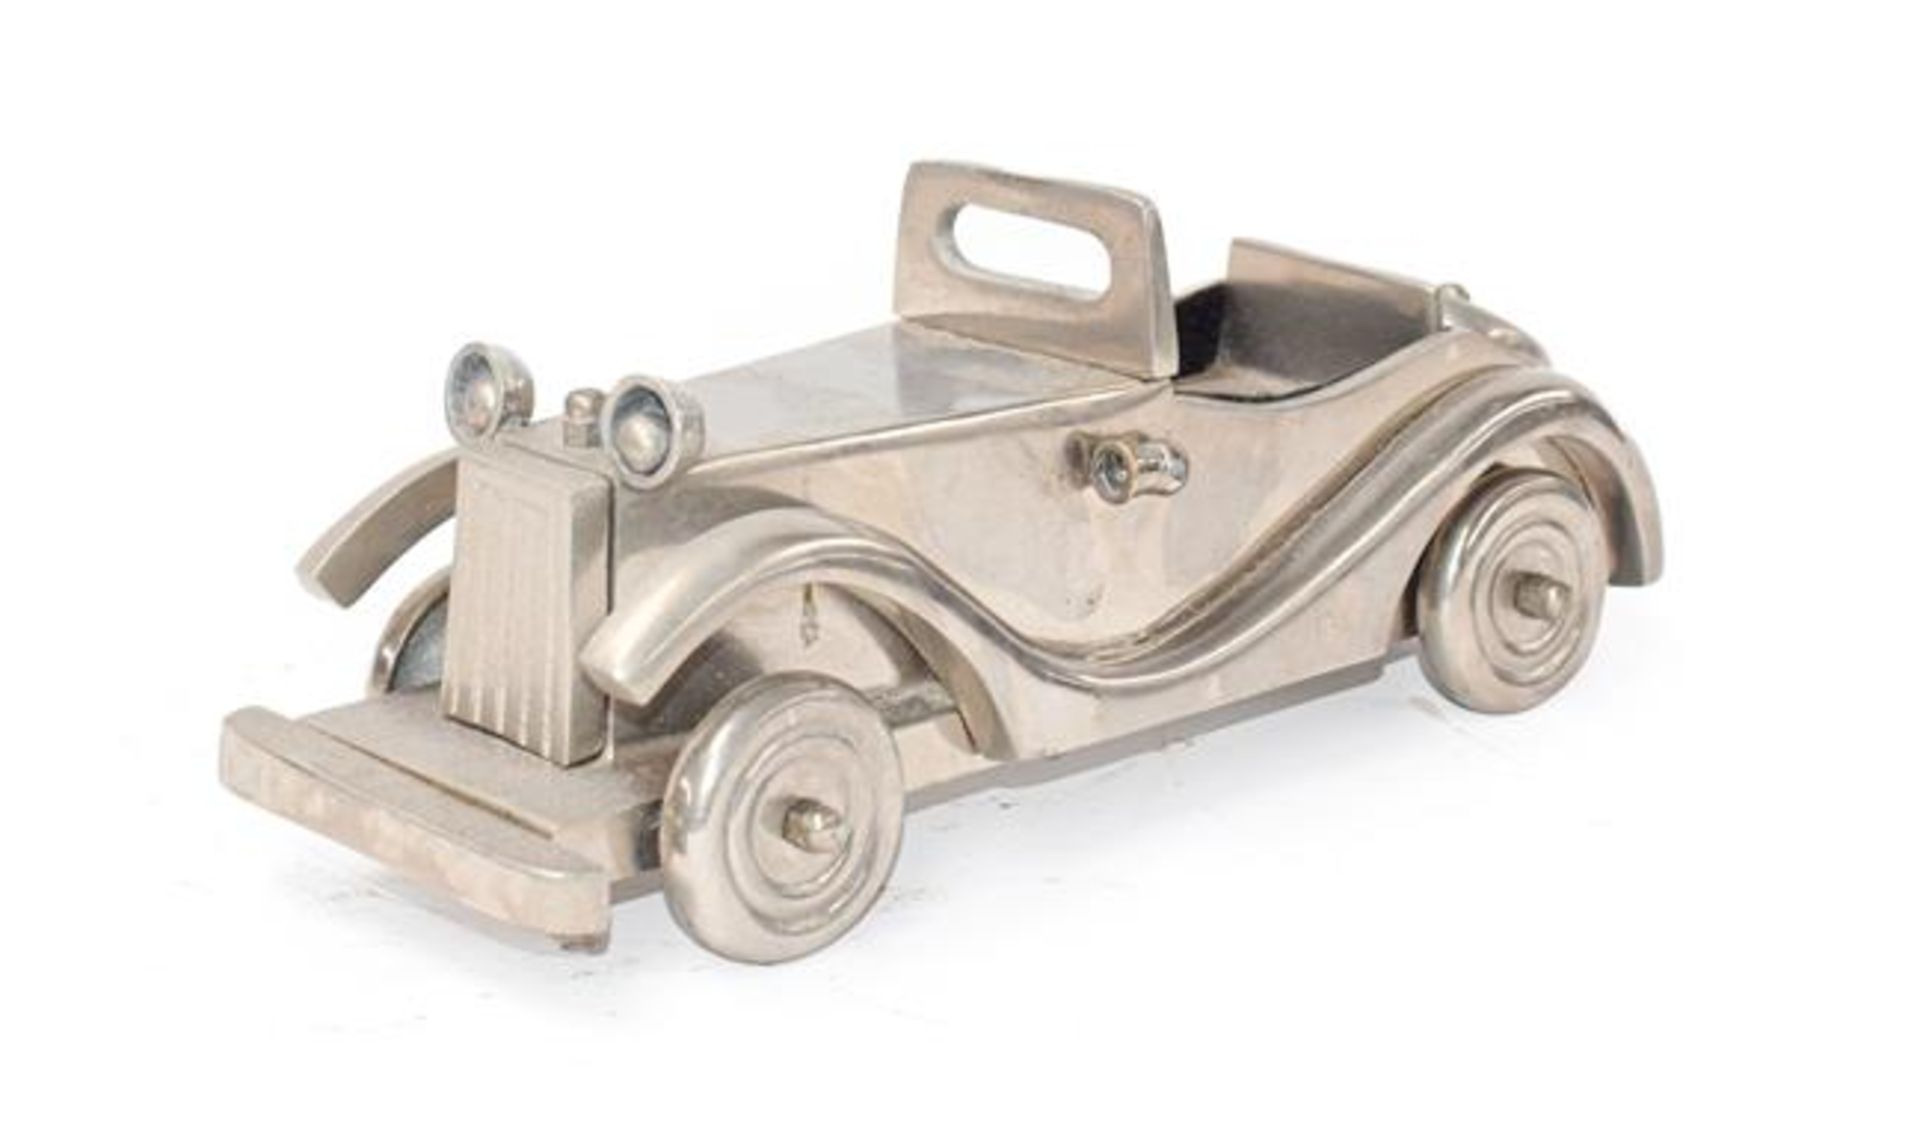 ~ A Chromed Metal Scale Model of a 1930's Motor Car, 29cm diameter